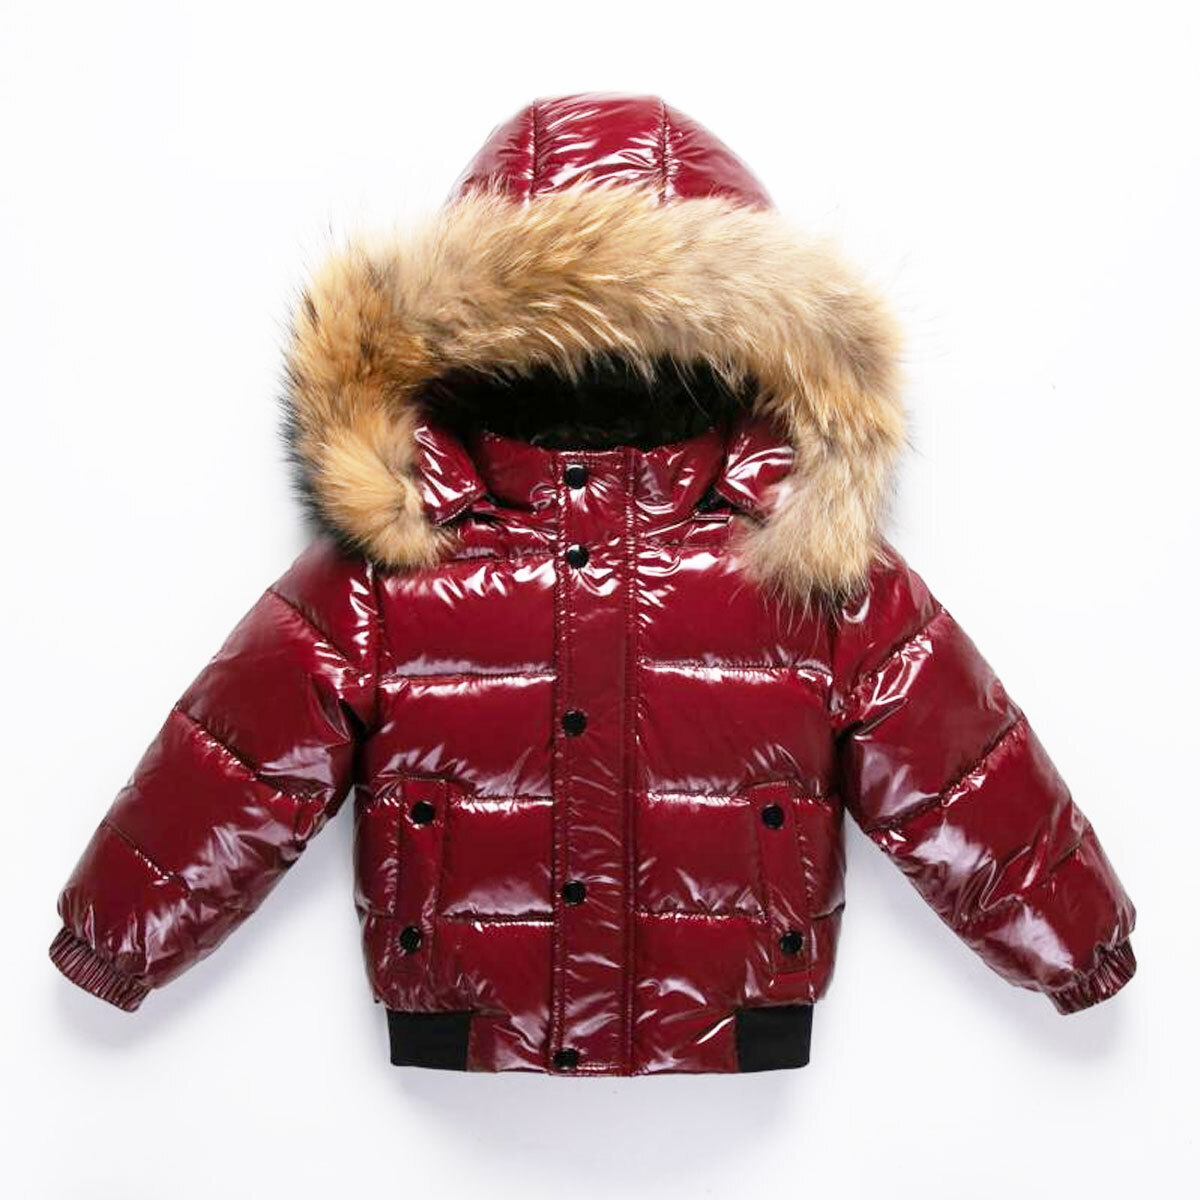 10 10 Best Kids Winter Jackets To Keep Them Warm In 2022